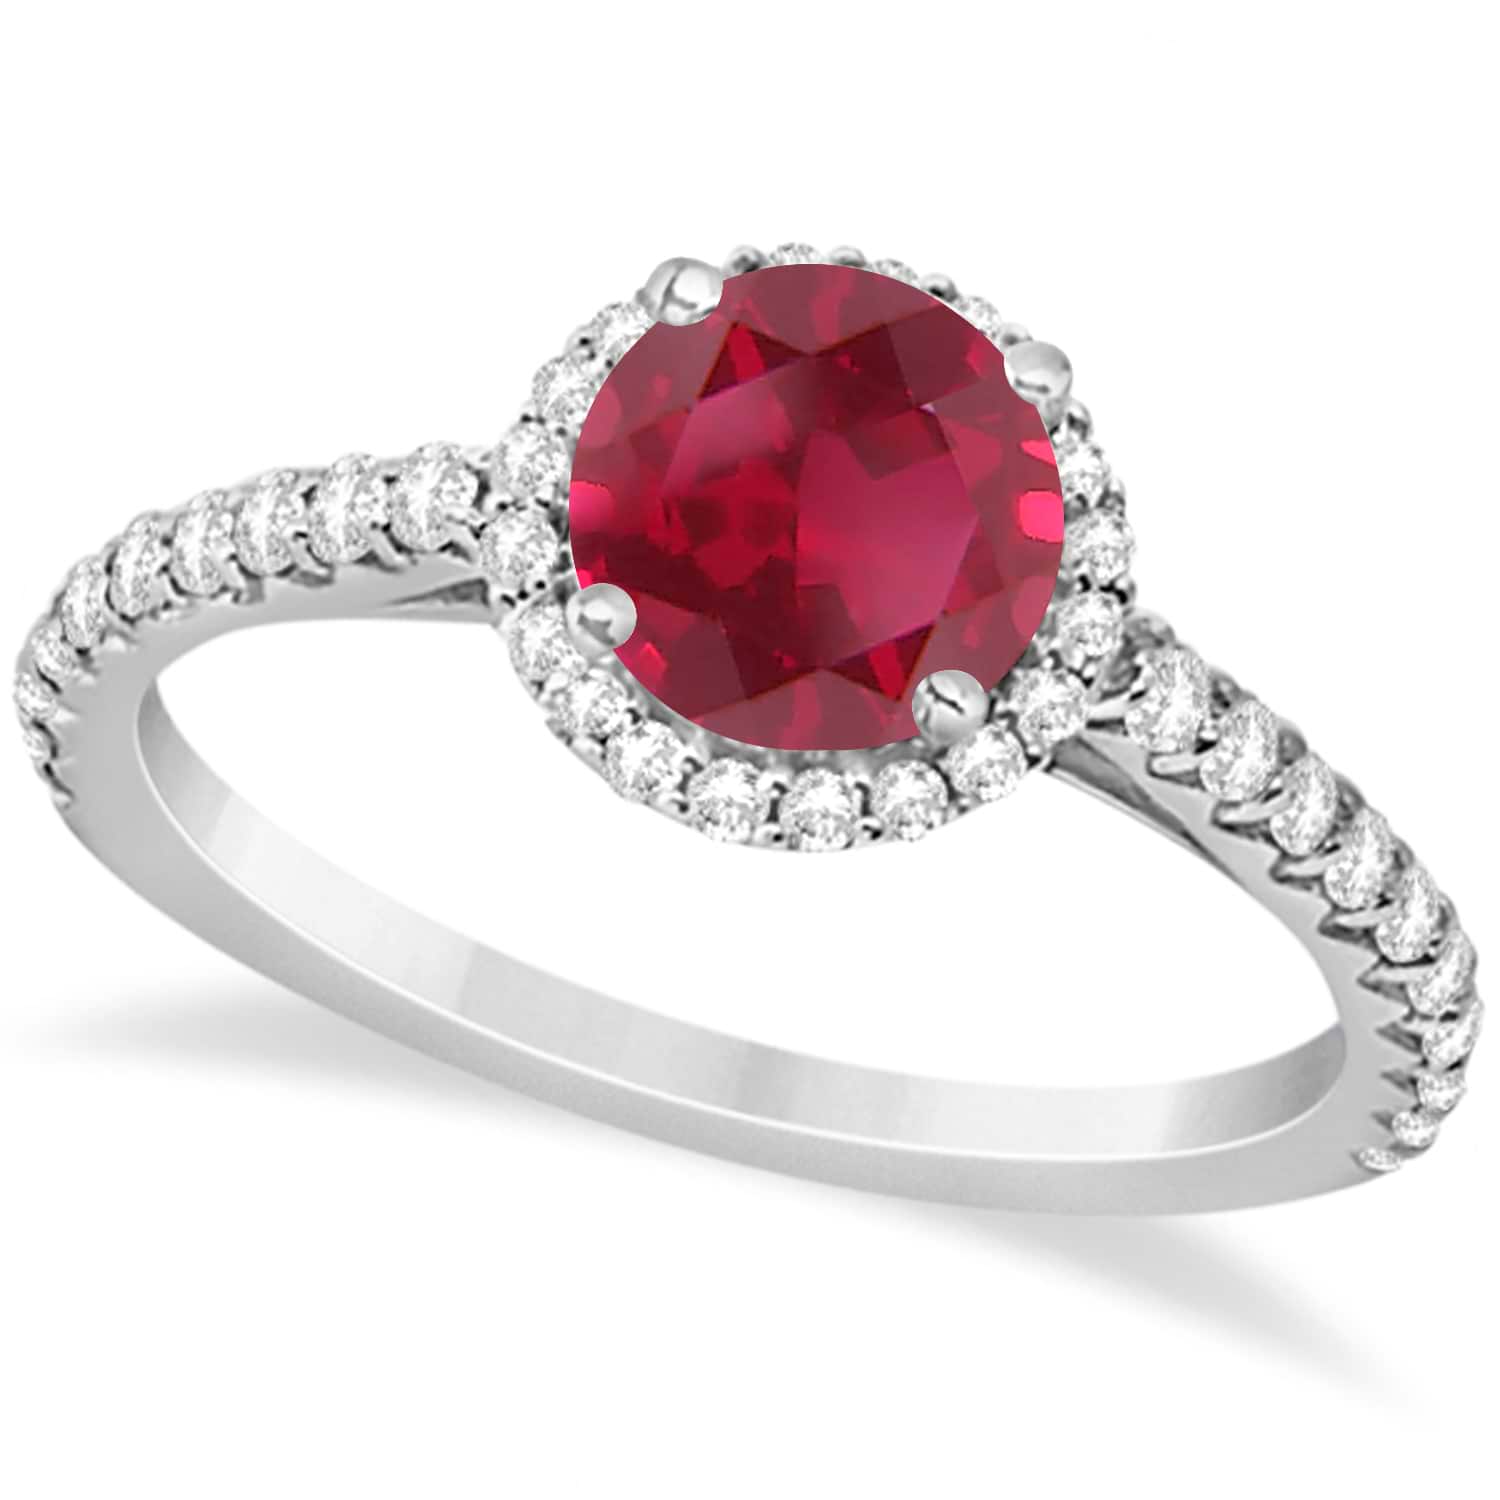 Halo Ruby & Diamond Engagement Ring  14K White Gold 1.91ct